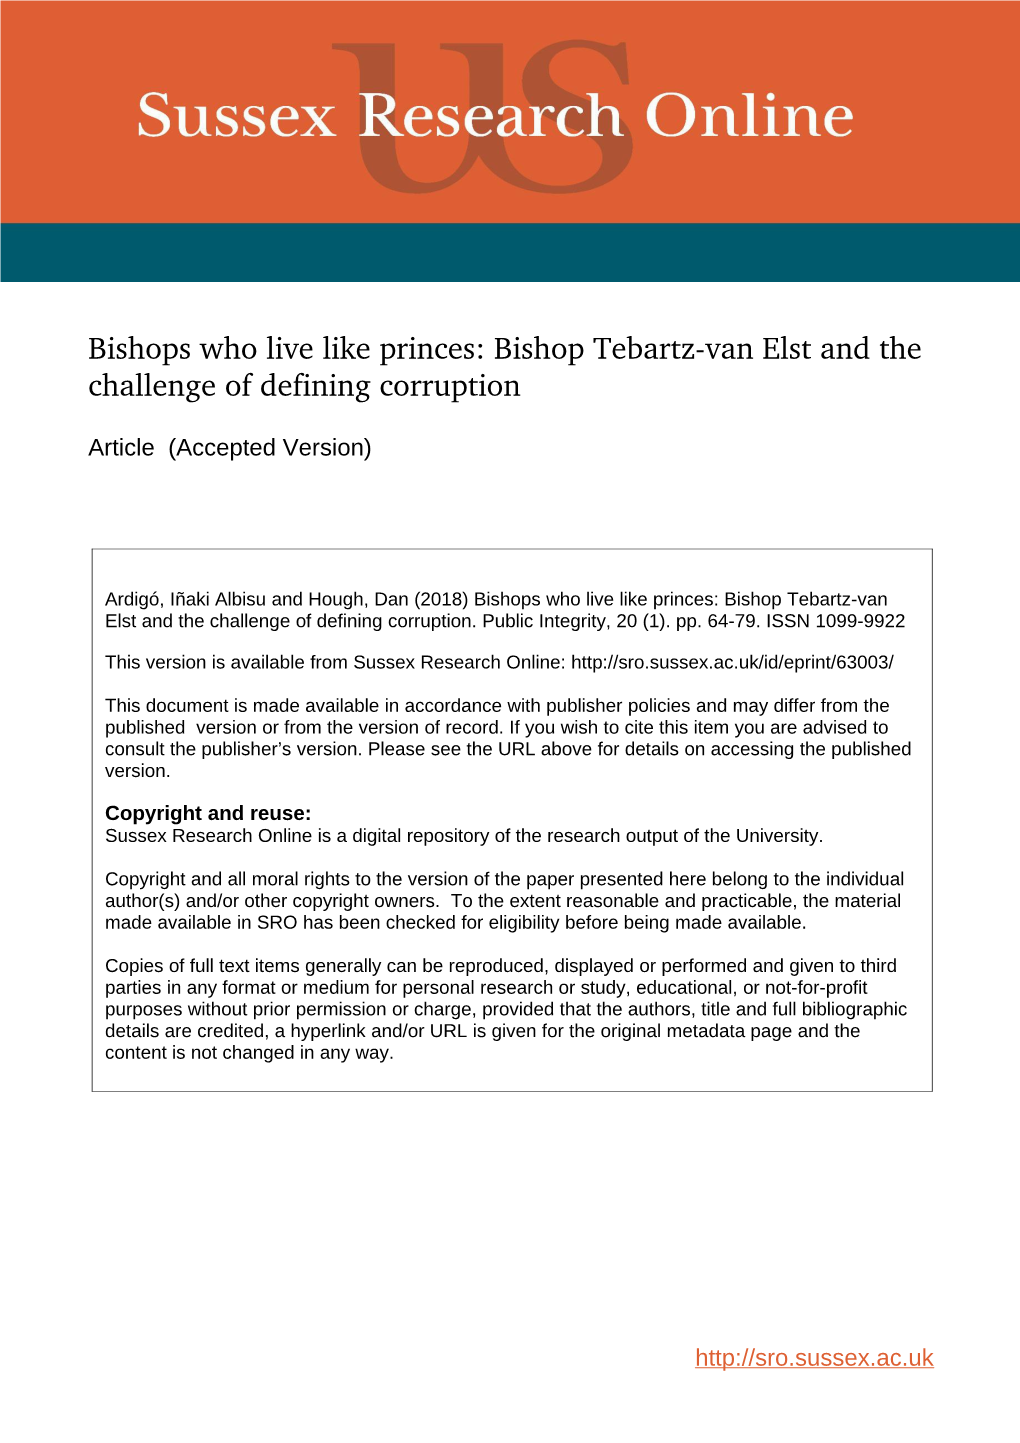 Bishop Tebartzvan Elst and the Challenge of Defining Corruption